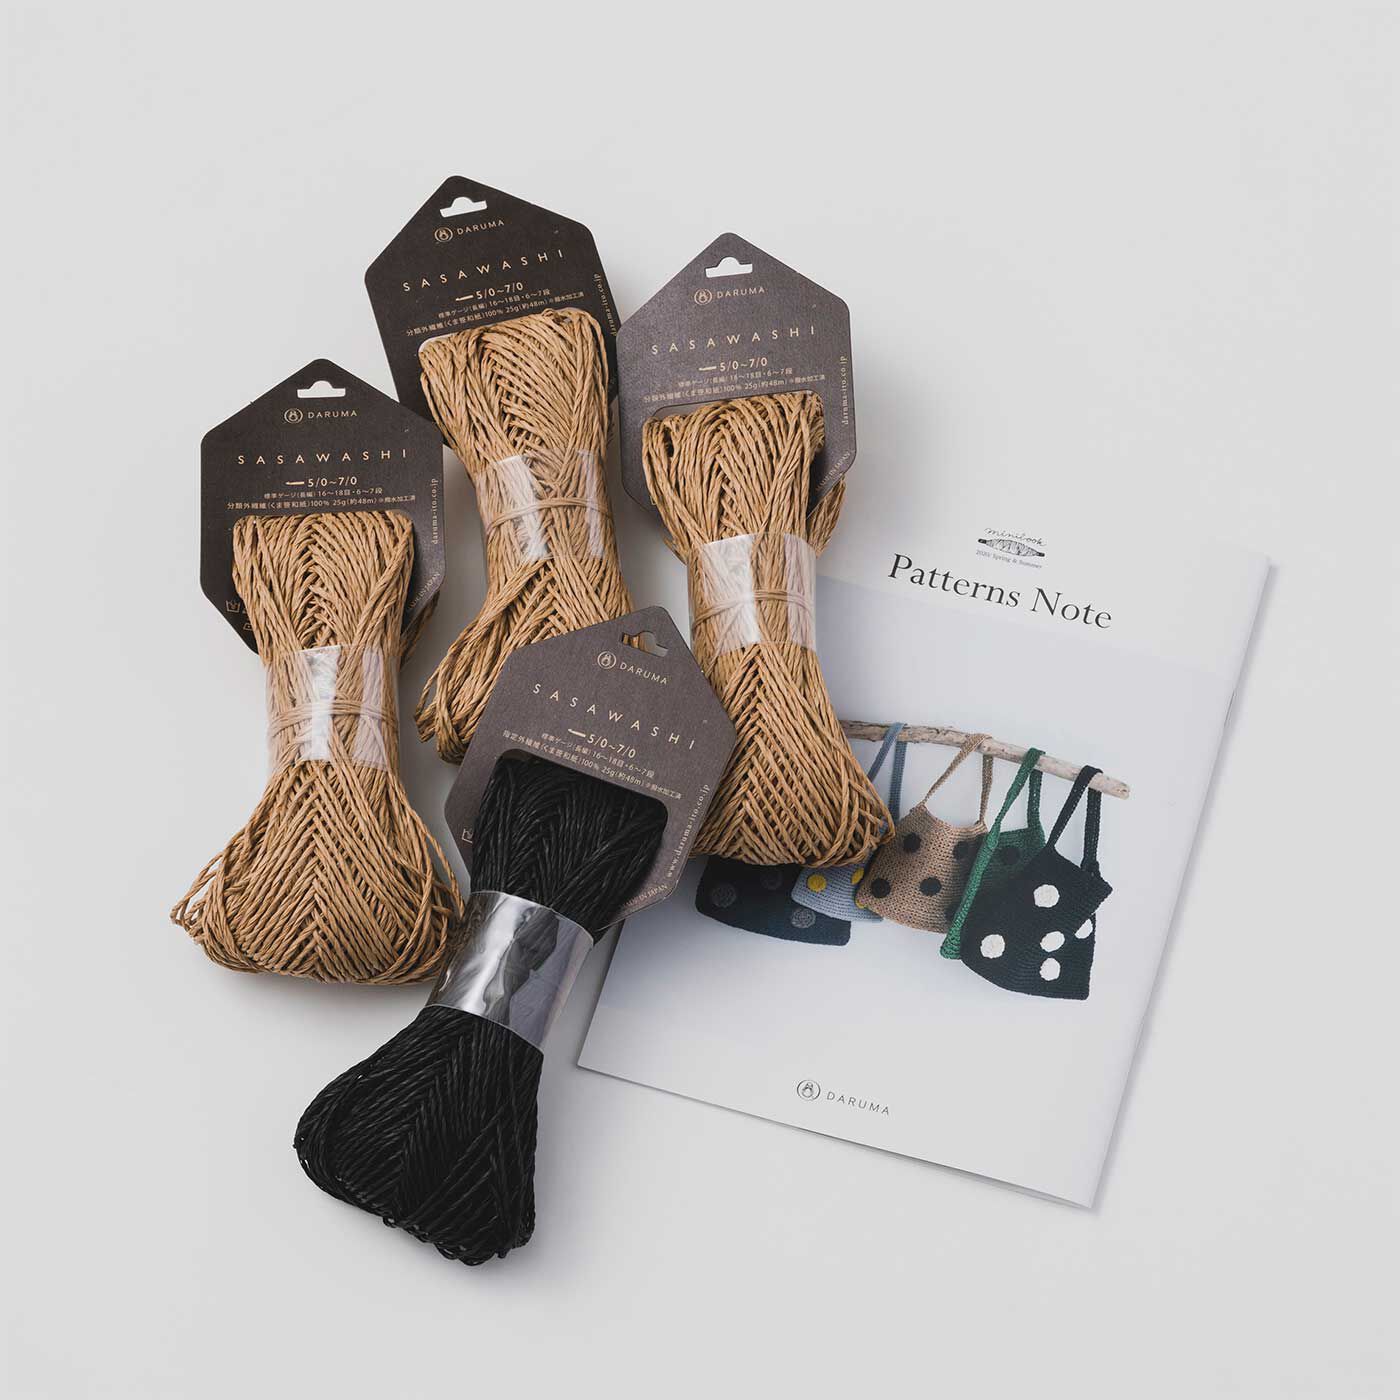 Couturier special|水玉ベージュのバッグが編める ＳＡＳＡＷＡＳＨＩ糸とミニブック「ＰａｔｔｅｒｎｓＮｏｔｅ」|●お届けの一式です。